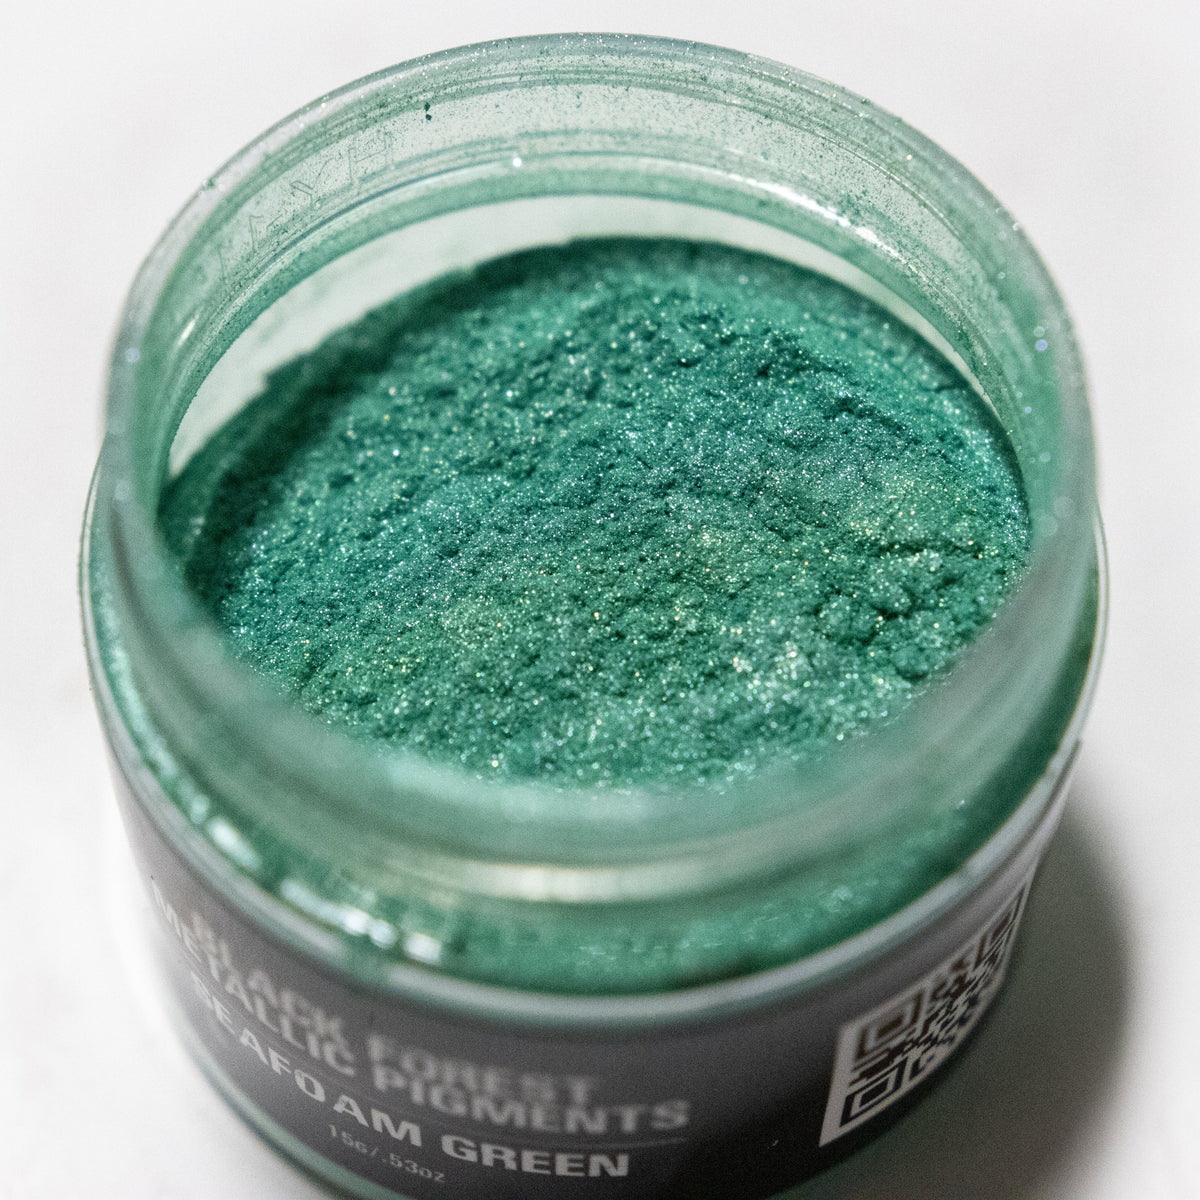 Seafoam Green - Black Forest Metallic Pigment